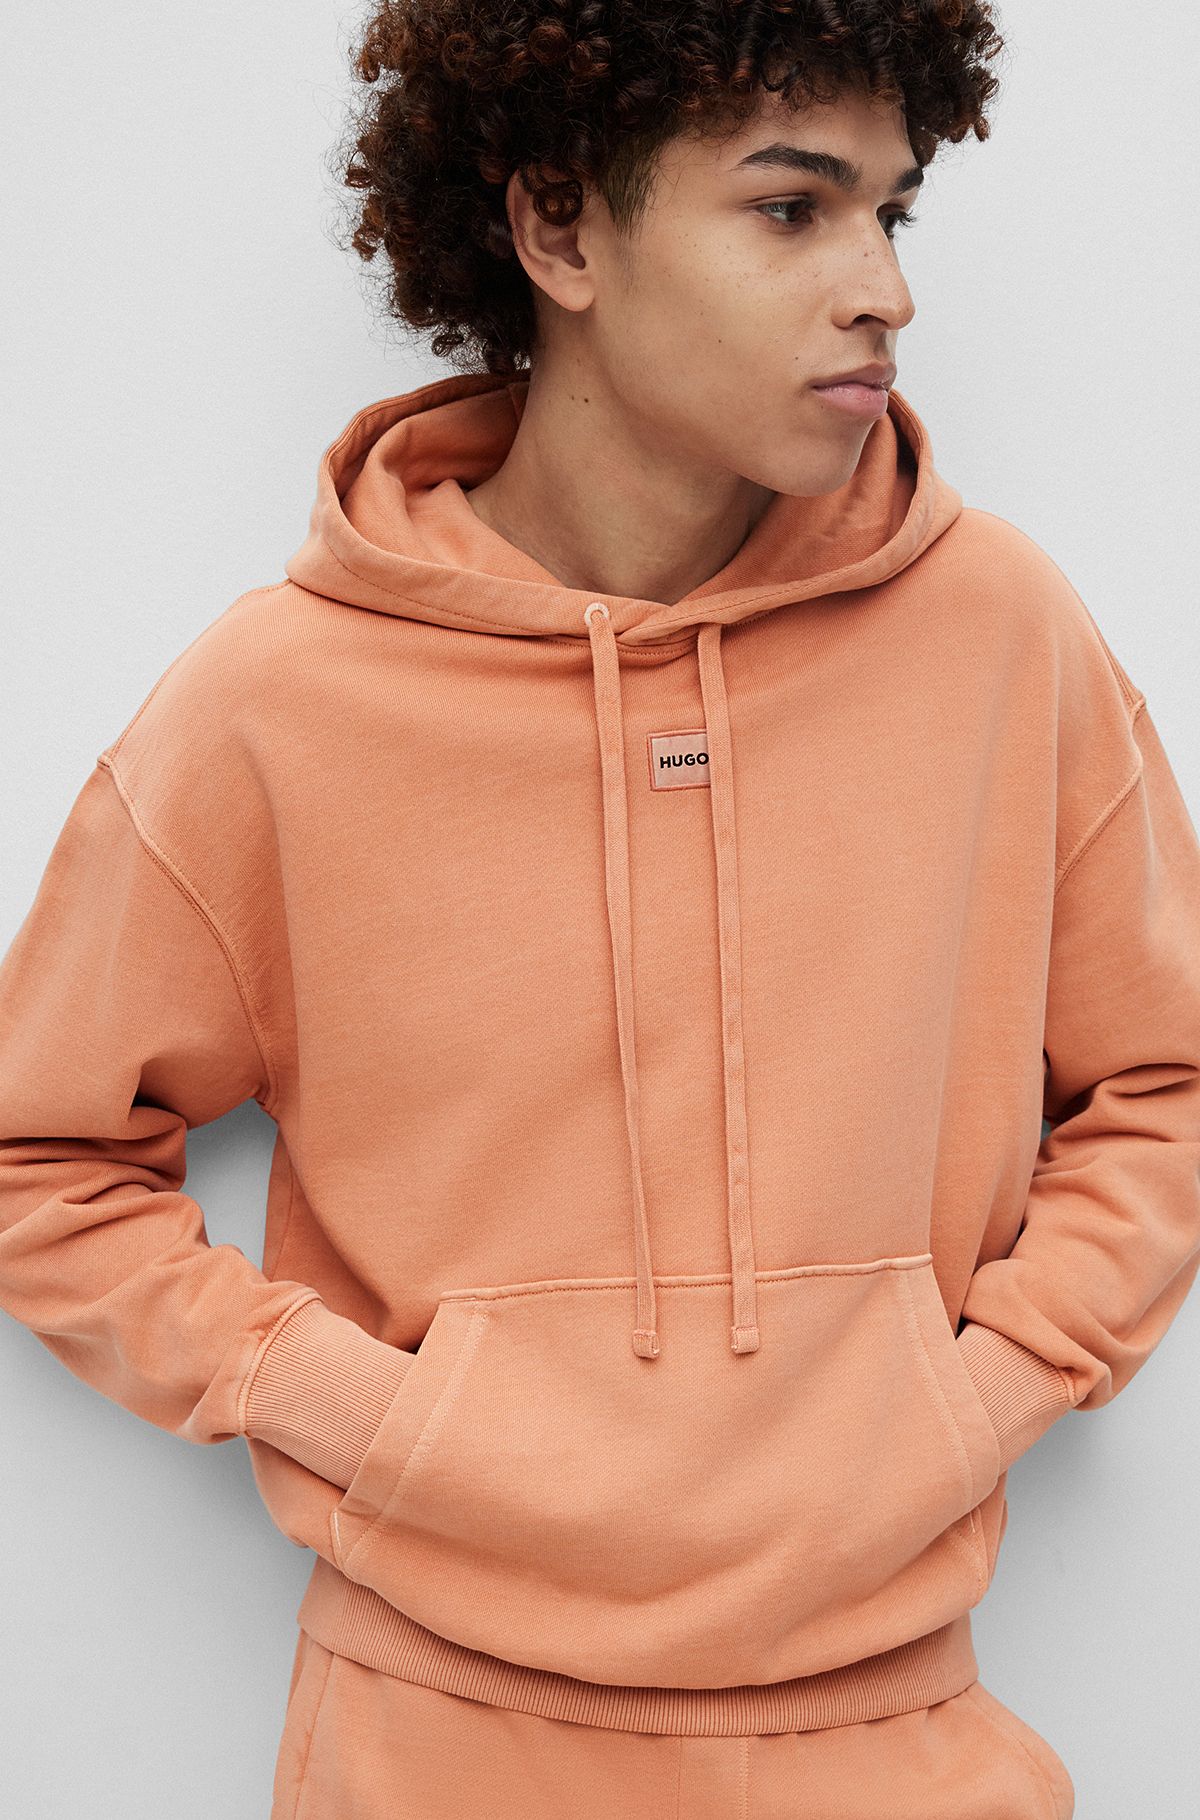 Hooded sweatshirts in Orange by HUGO BOSS | Men